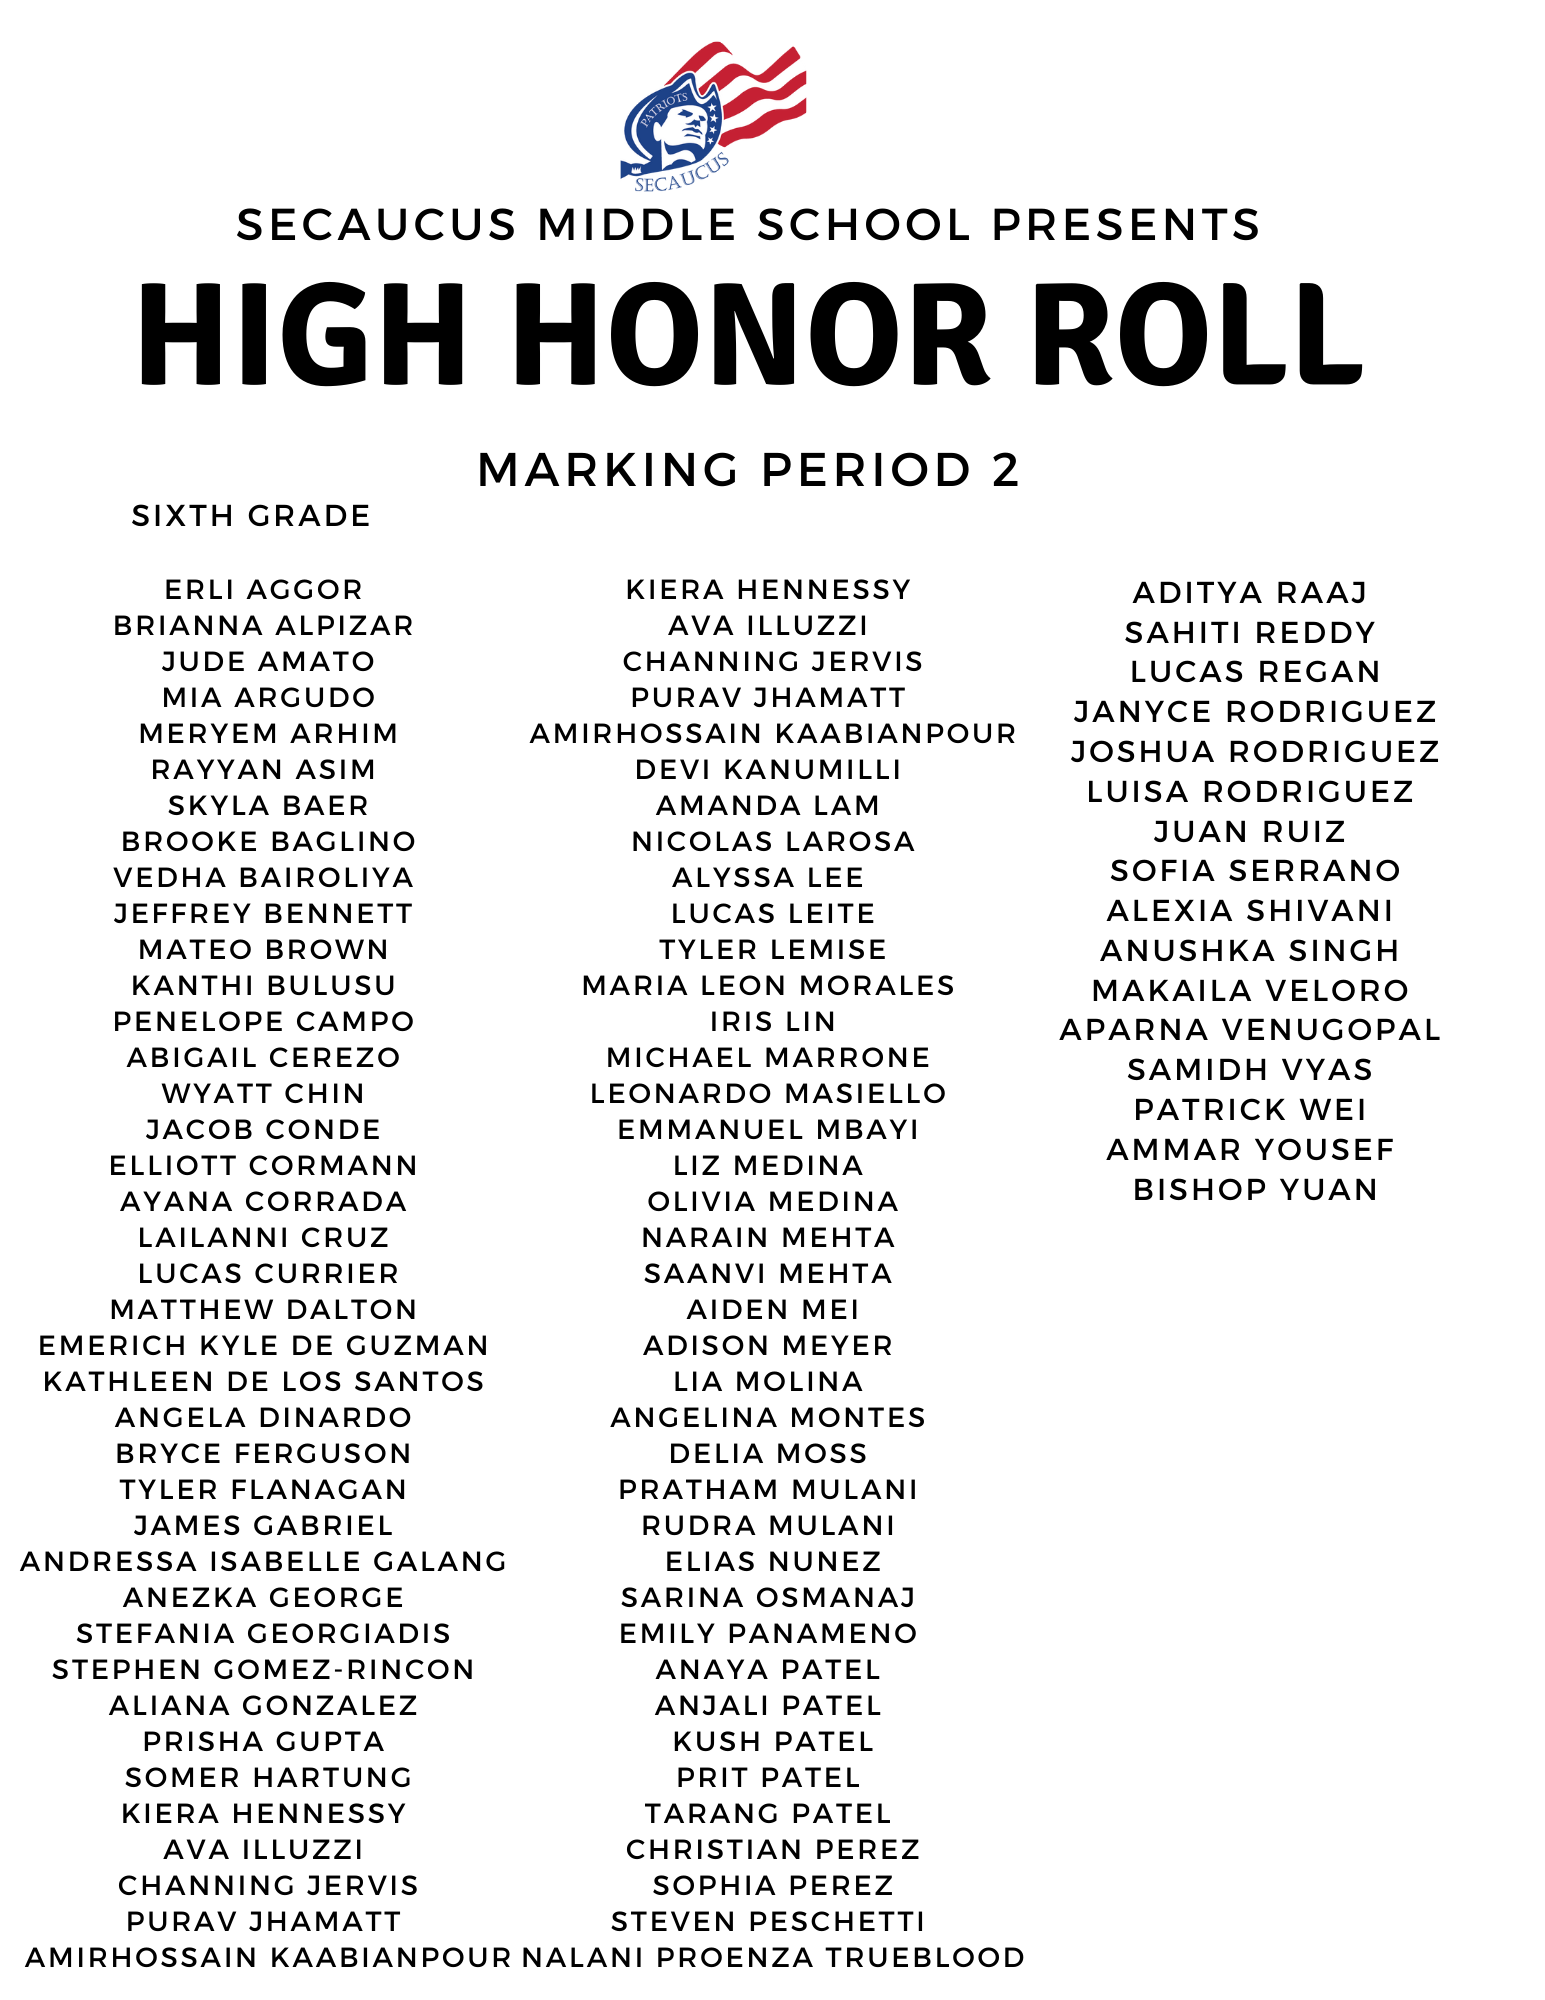 High Honors